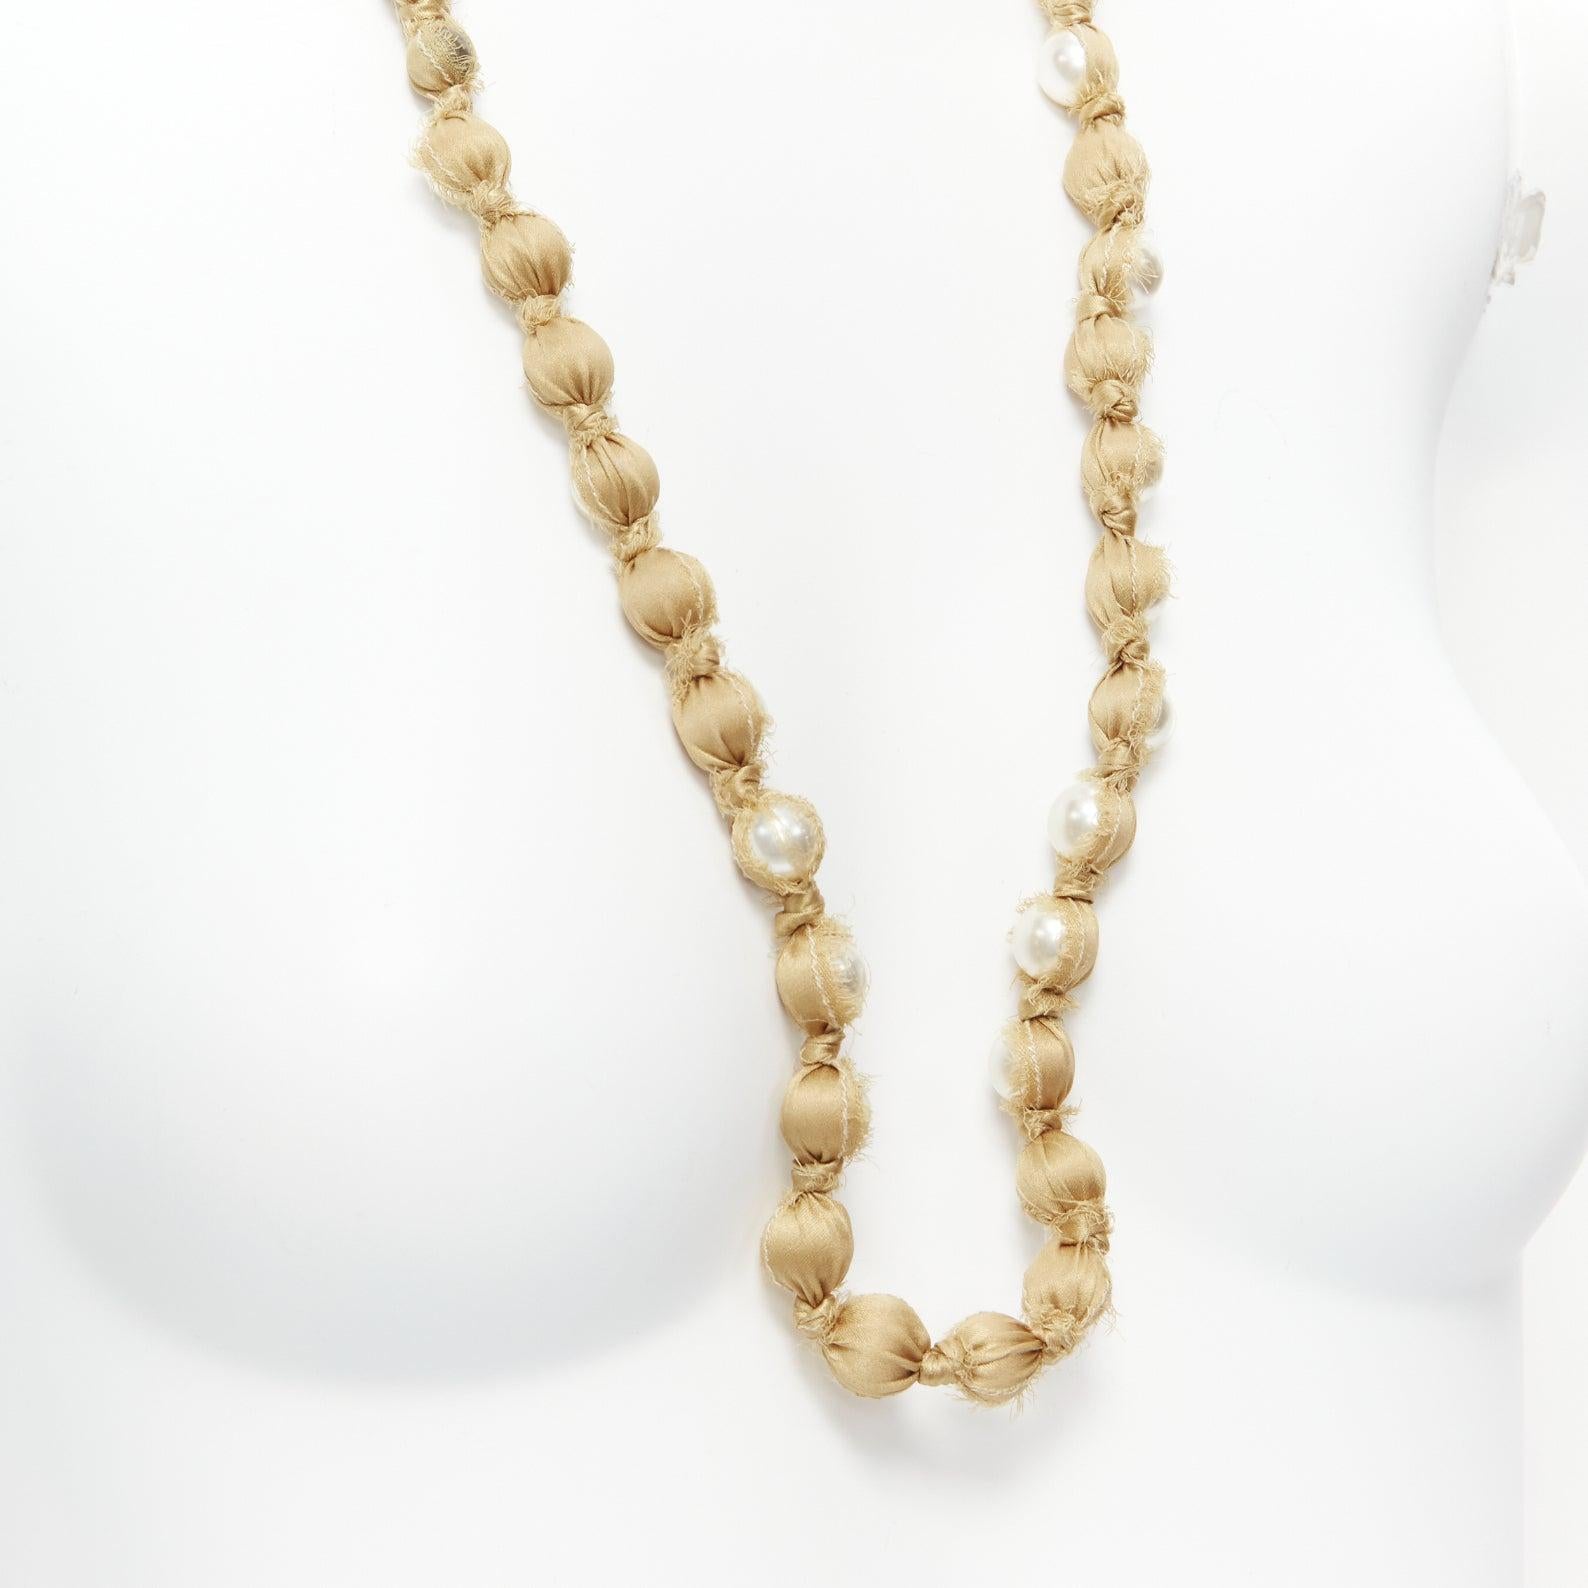 LANVIN ALBER ELBAZ gold silk ribbon cream pearl wrap long necklace
Reference: SNKO/A00341
Brand: Lanvin
Designer: Alber Elbaz
Material: Silk, Faux Pearl
Color: Pearl, Gold
Pattern: Solid
Closure: Self Tie

CONDITION:
Condition: Excellent, this item